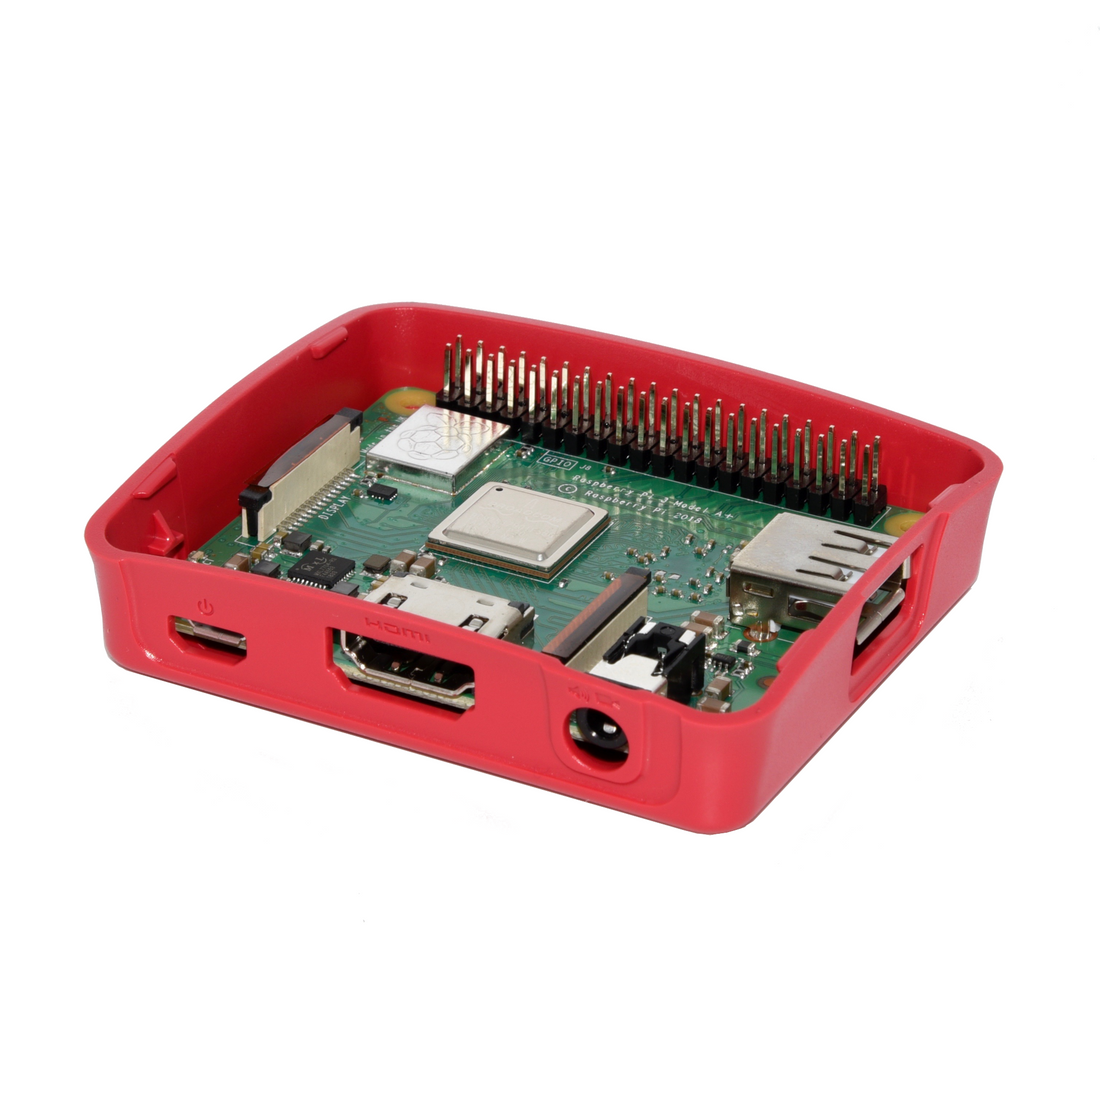 PepperTech Digital Raspberry Pi 3 Model A+ Value Pack (Red)